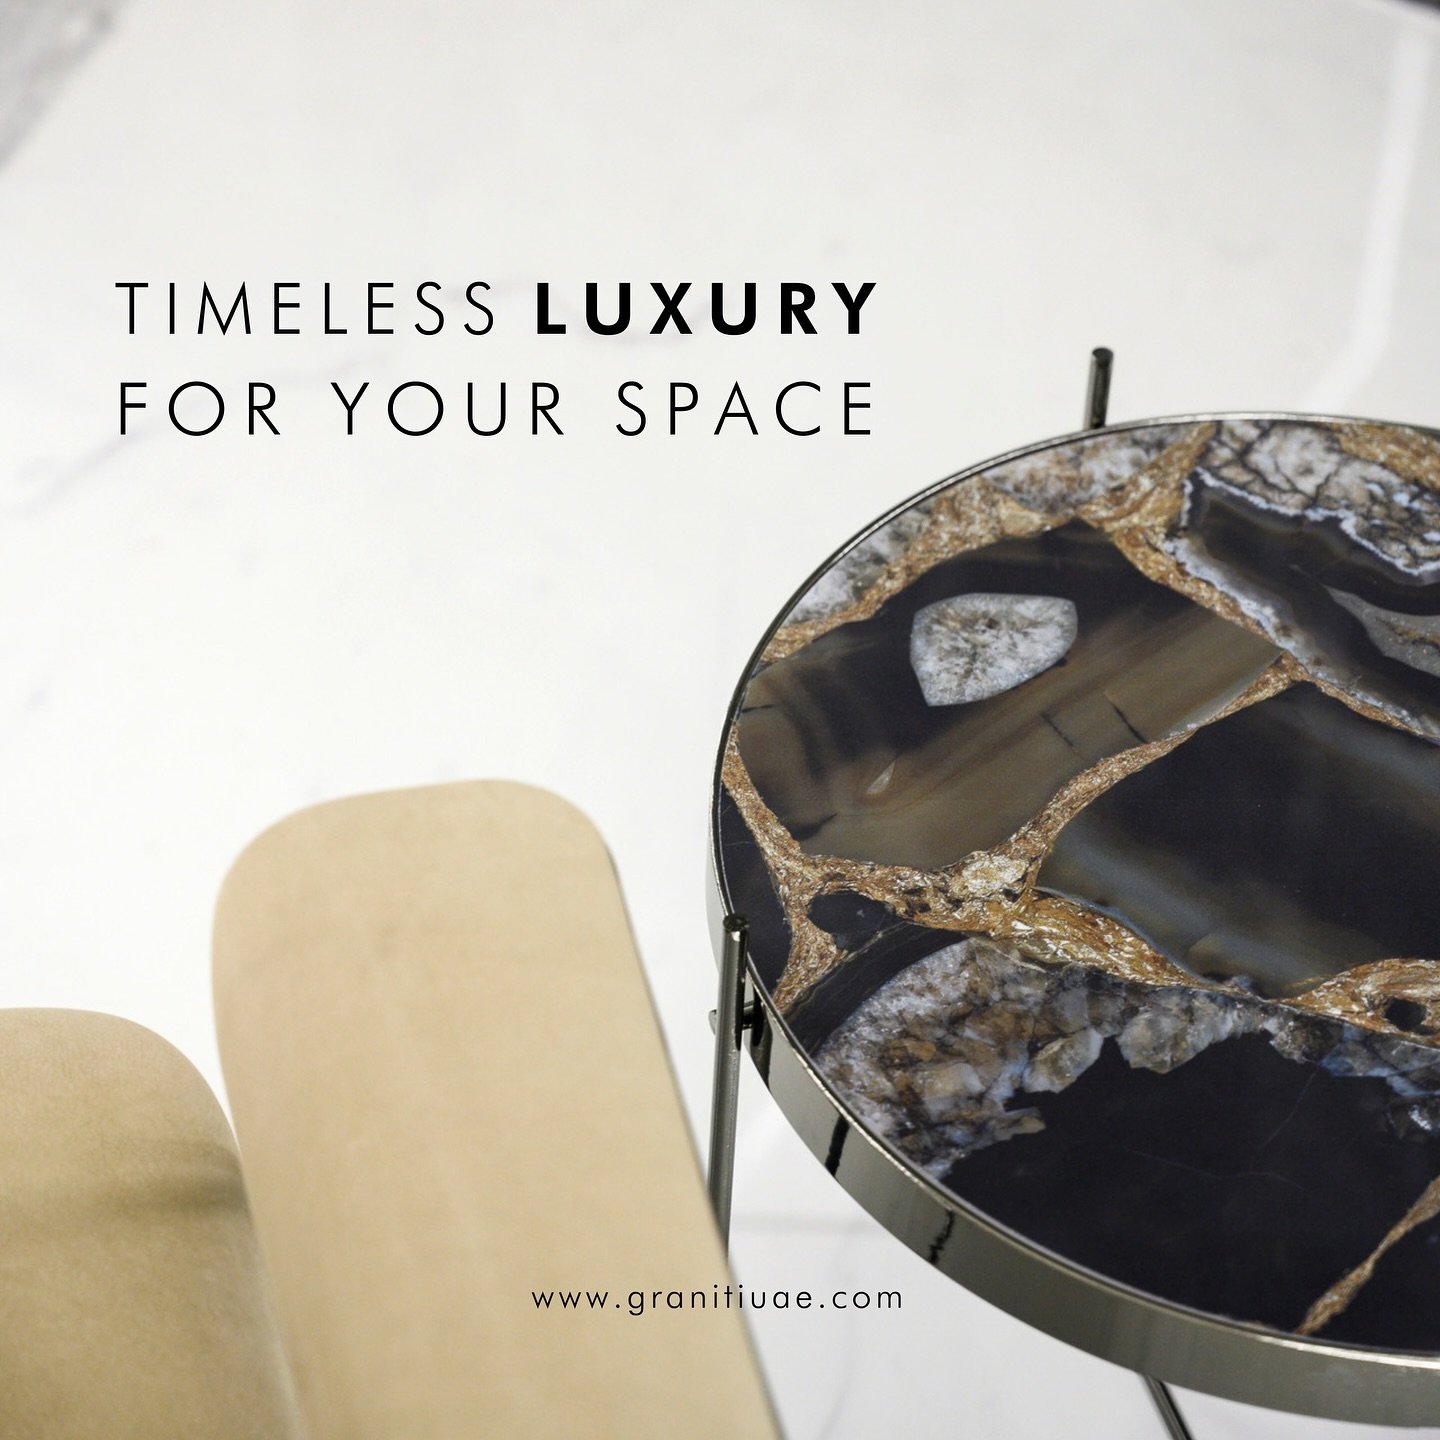 When luxury speaks your language. 

Visit our showroom:
📍Graniti Building Materials showroom: 685 Sheikh Zayed Rd, Dubai, UAE
📞 Whatsapp +971 52 310 6288